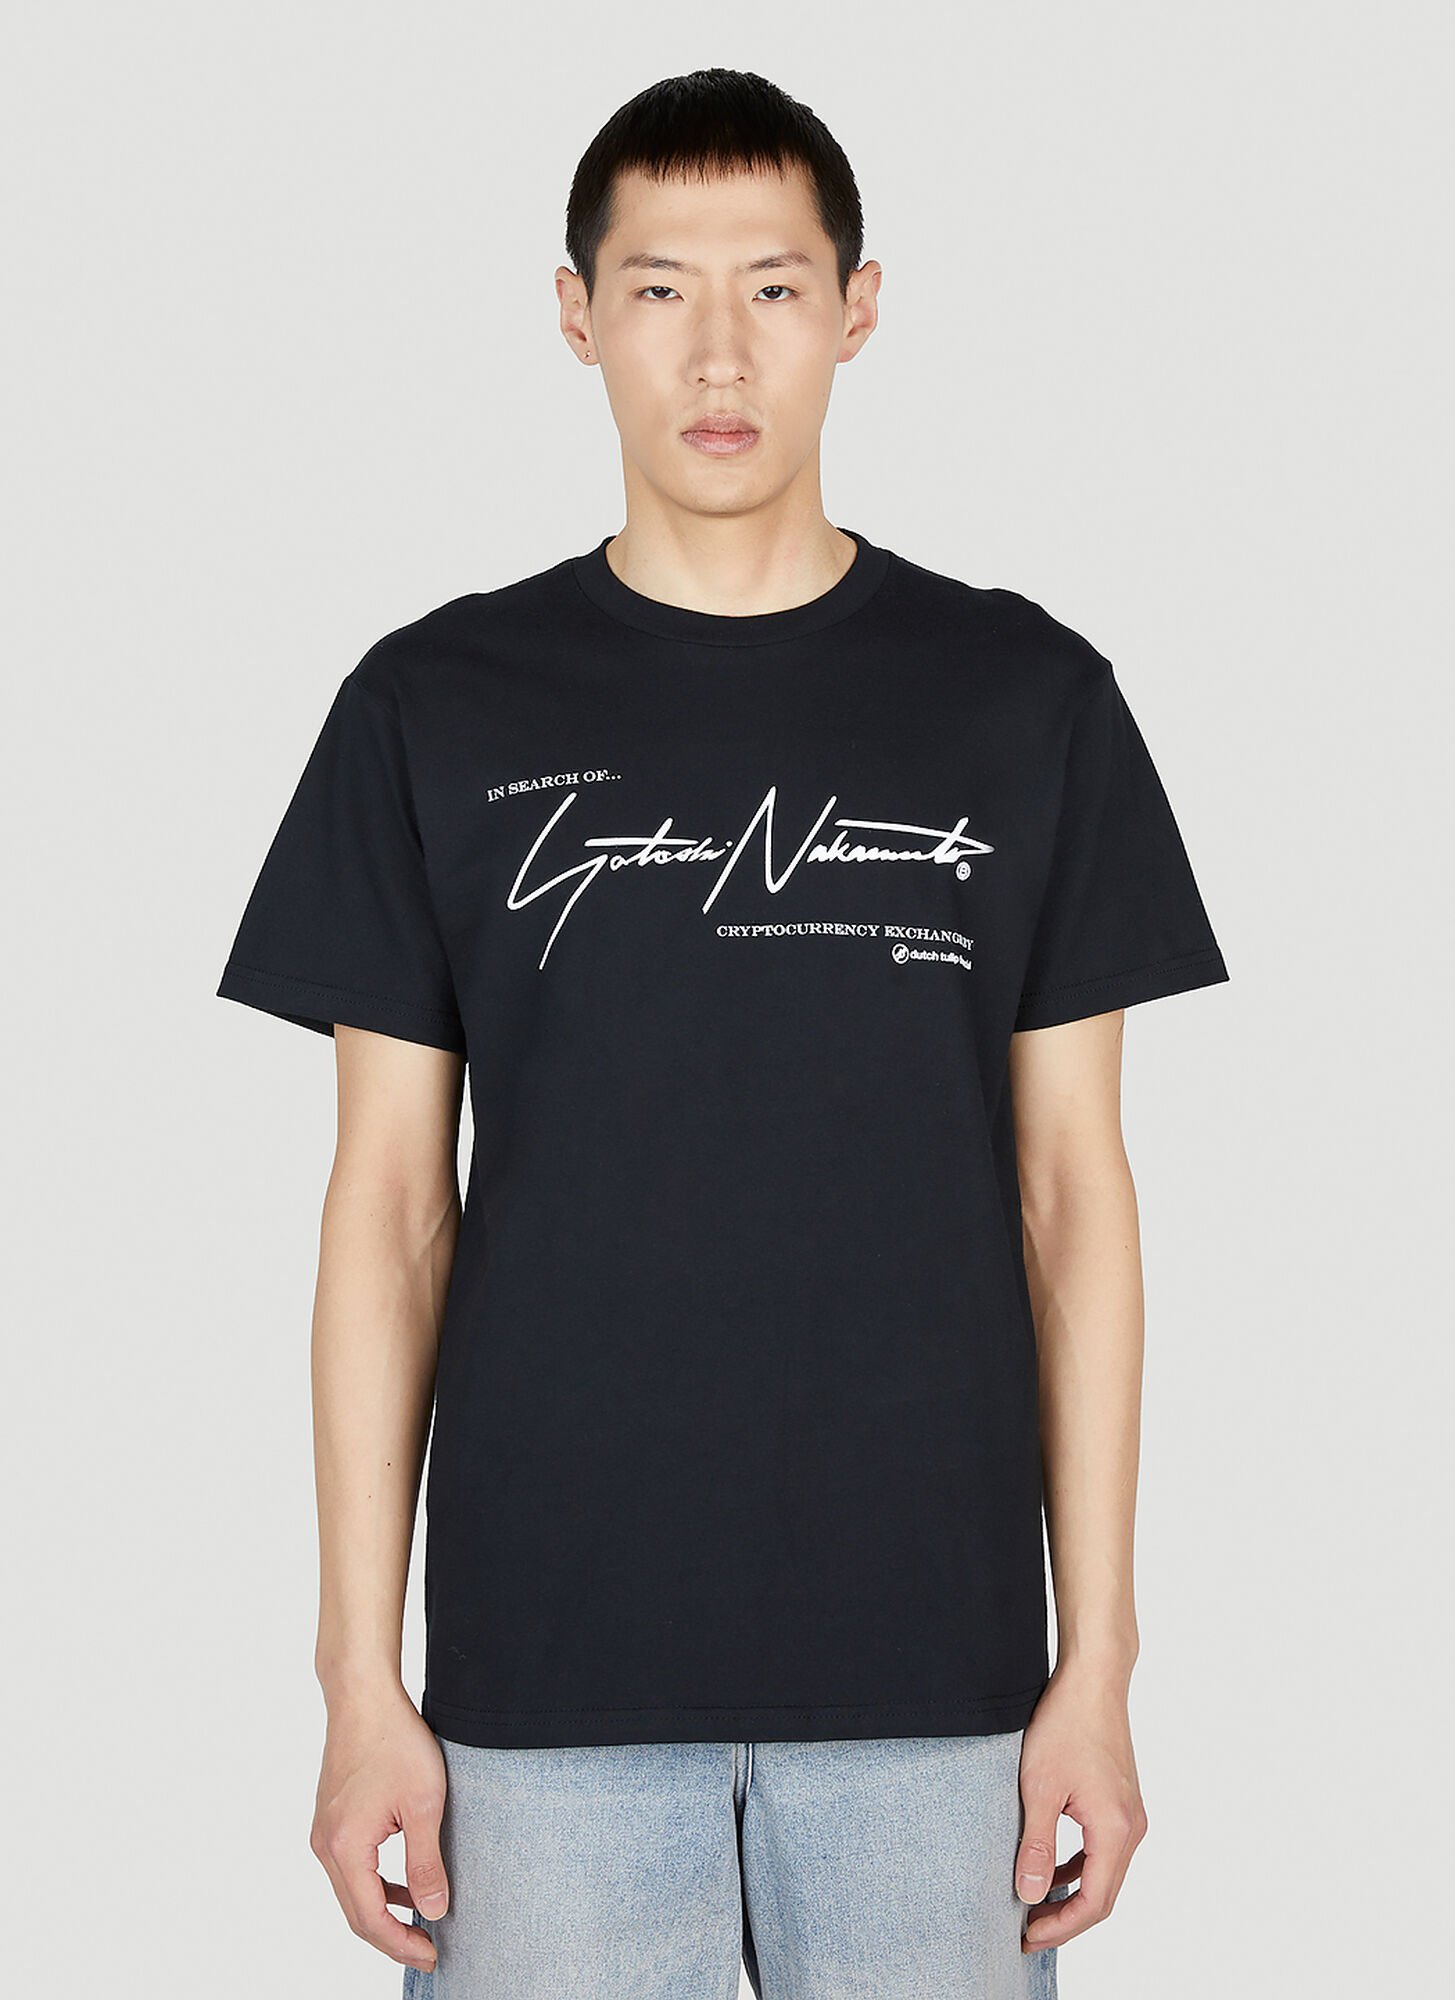 Dtf.nyc Satoshi Nakamoto T-shirt Male Black